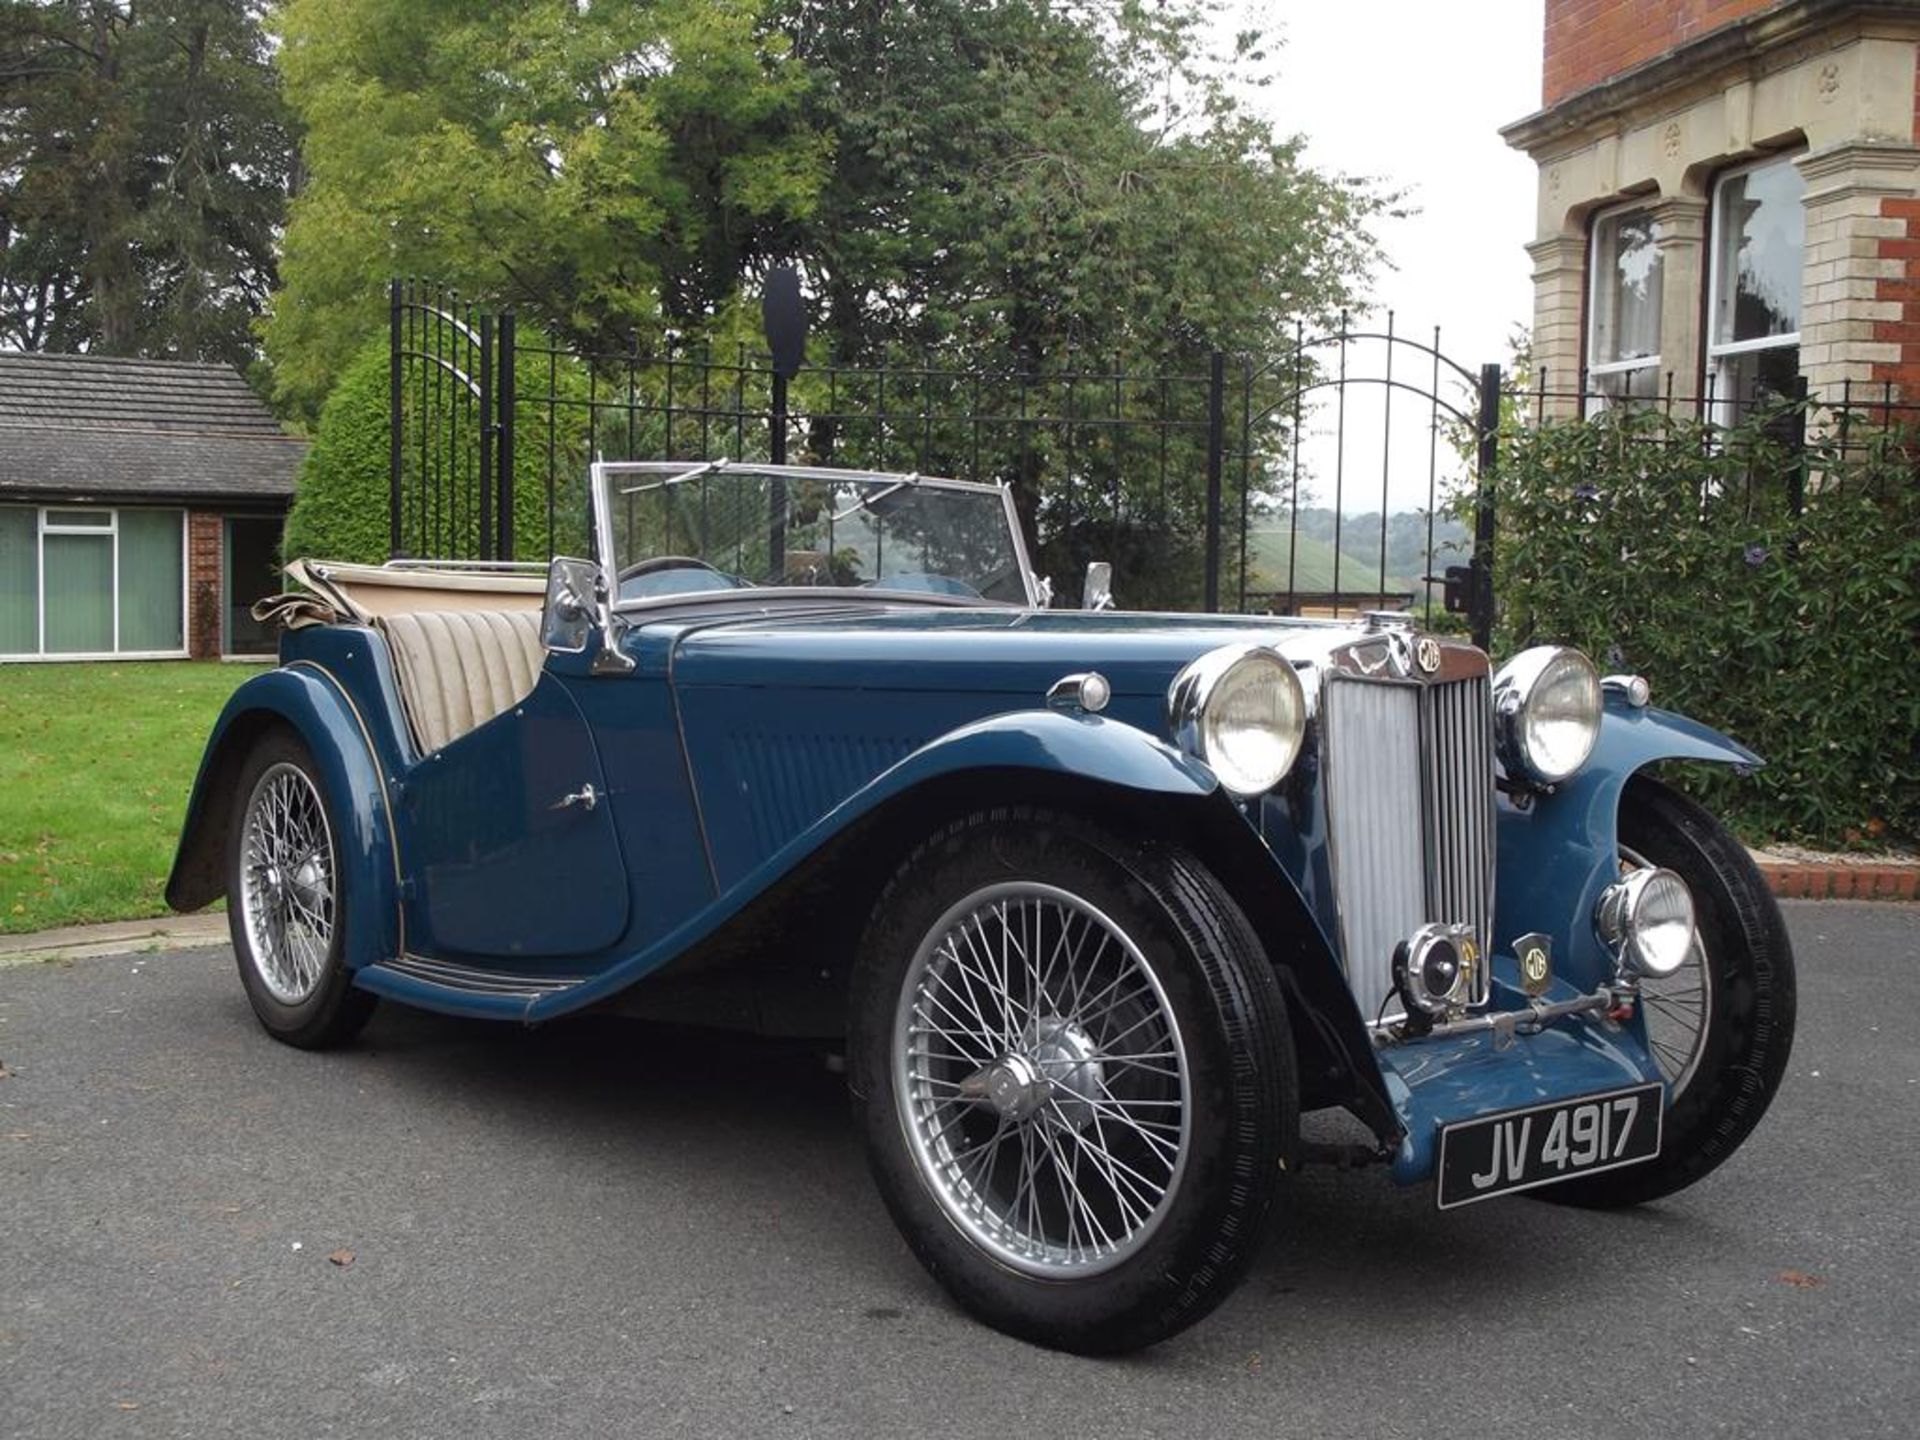 A 1936 MG TA, registration number JV 4917, chassis number TA 0291, engine number MPJM 39011,